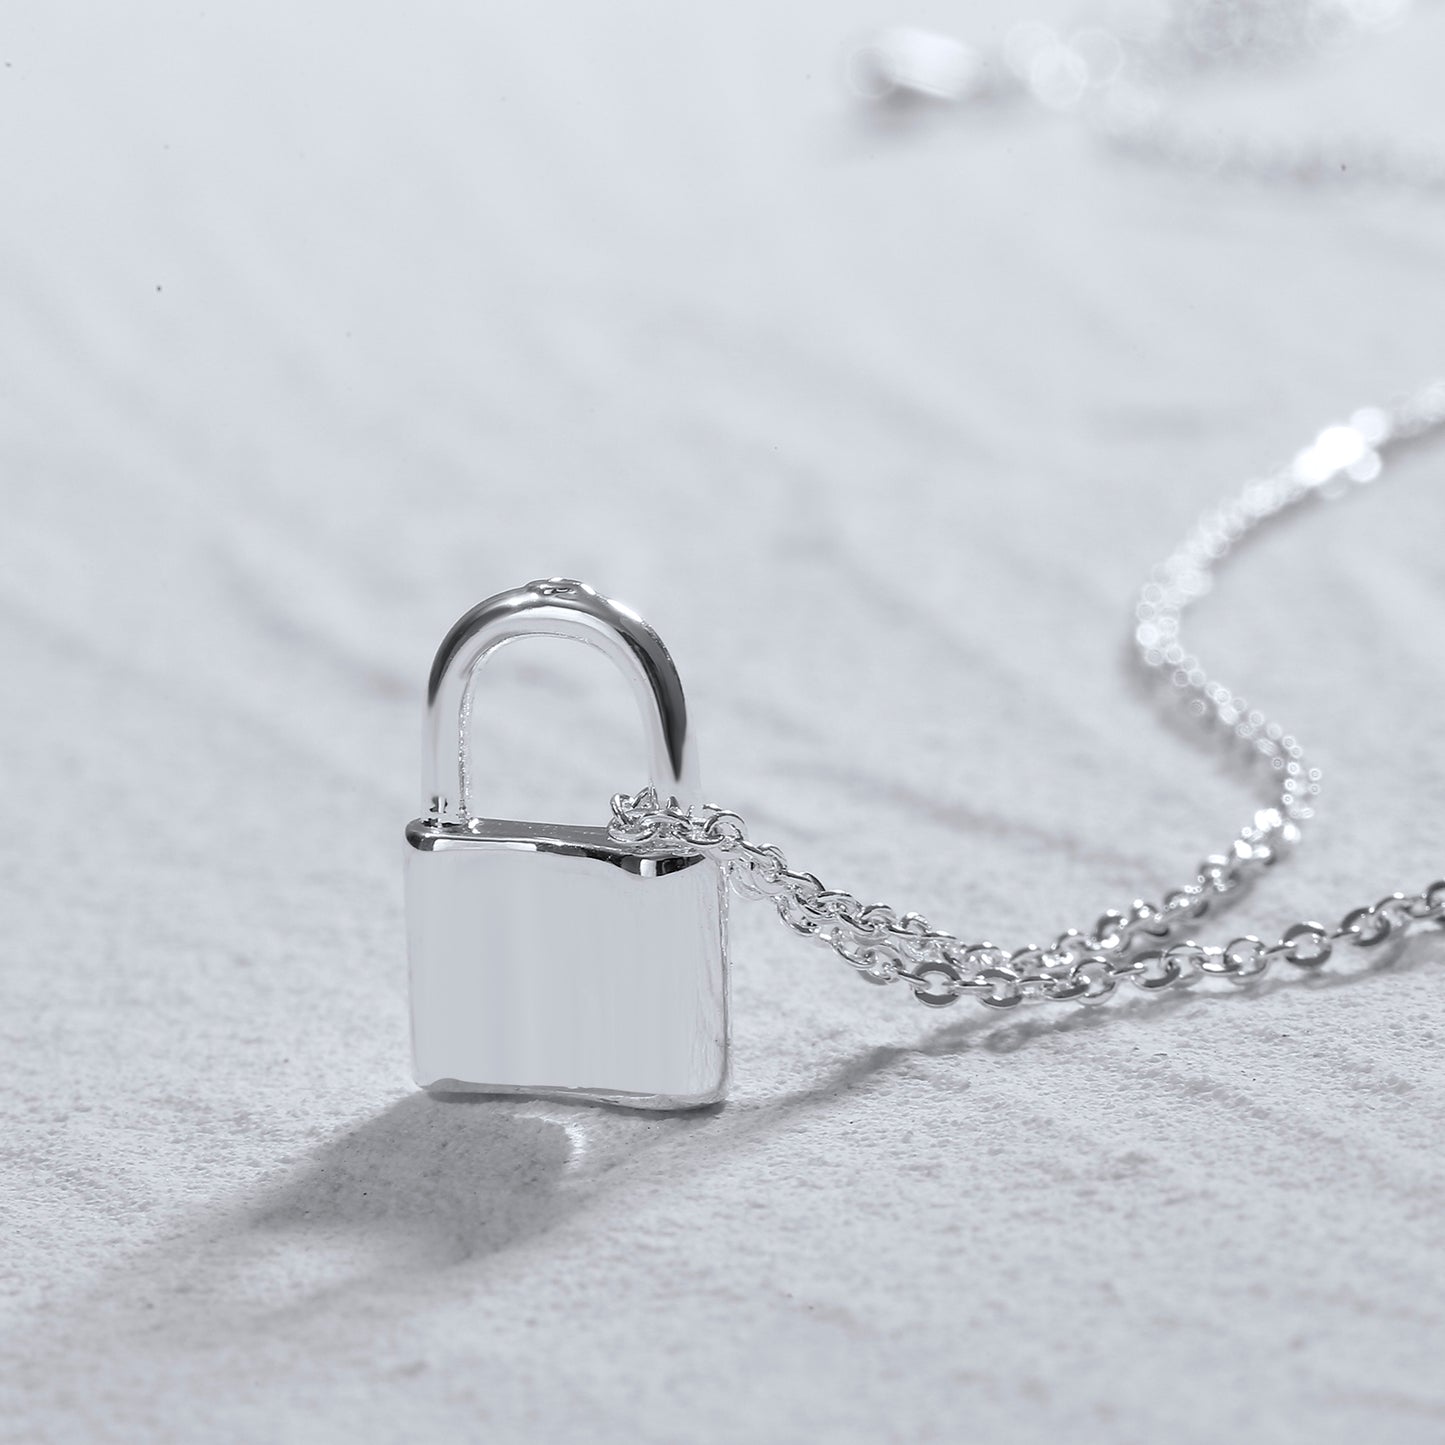 TASISO Tiny Lock Padlock Pendant Necklace